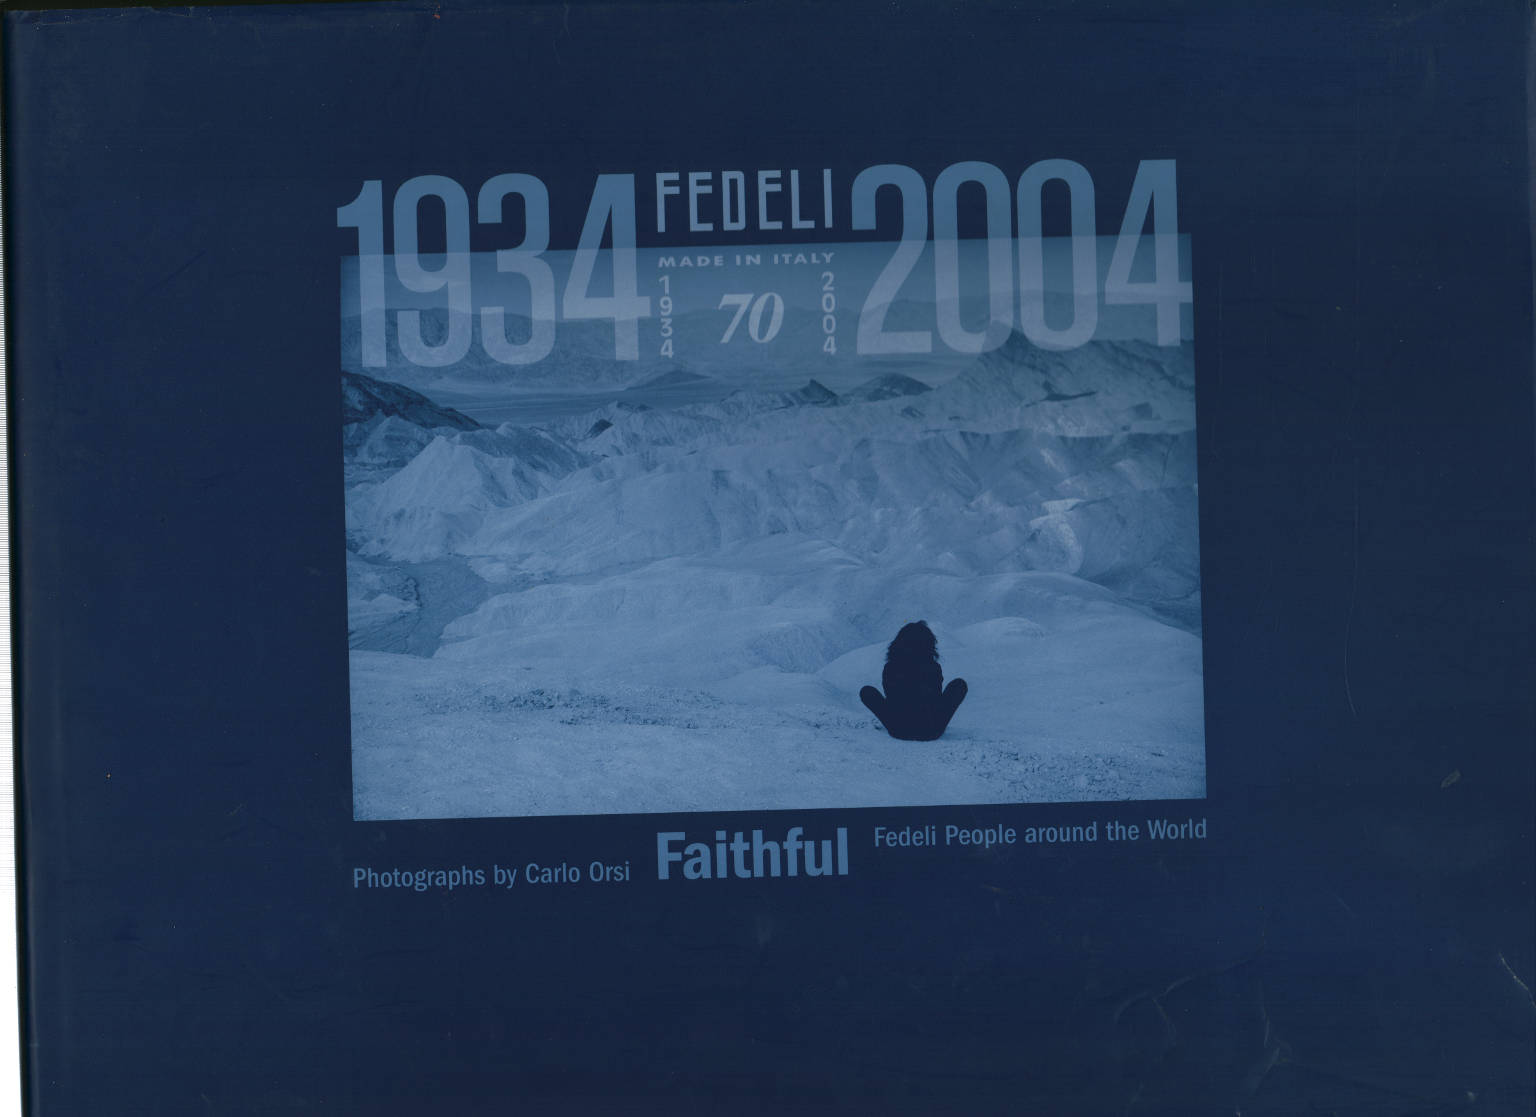 Faithful: fedeli People around the World, Carlo Orsi